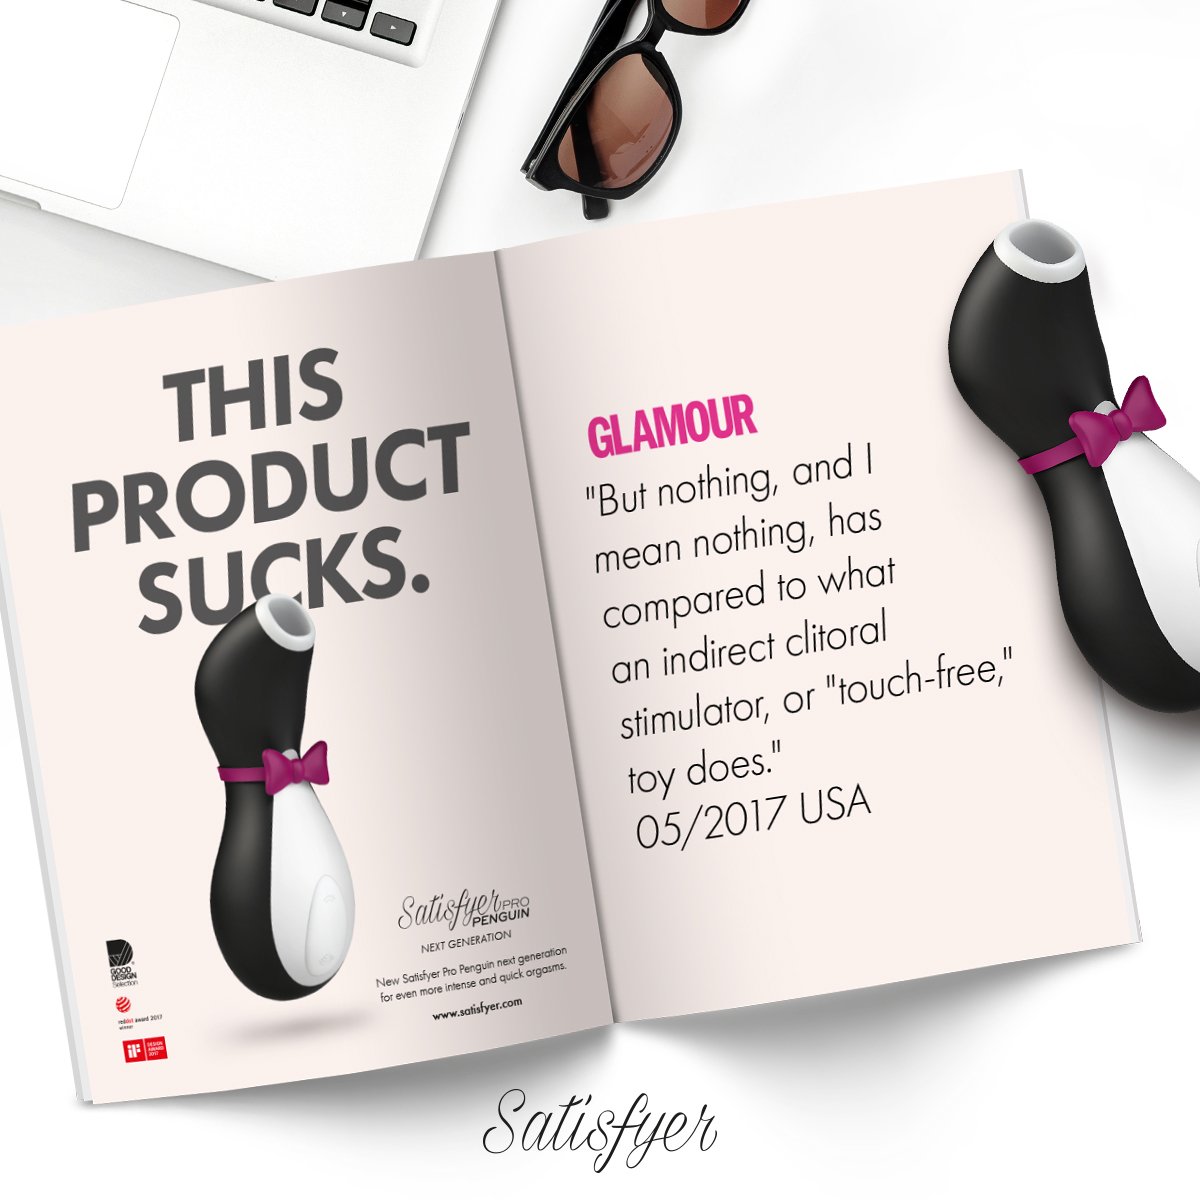 Satisfyer Pro Penguin Clitoral Stimulator Clit Sucker Vibrator USB